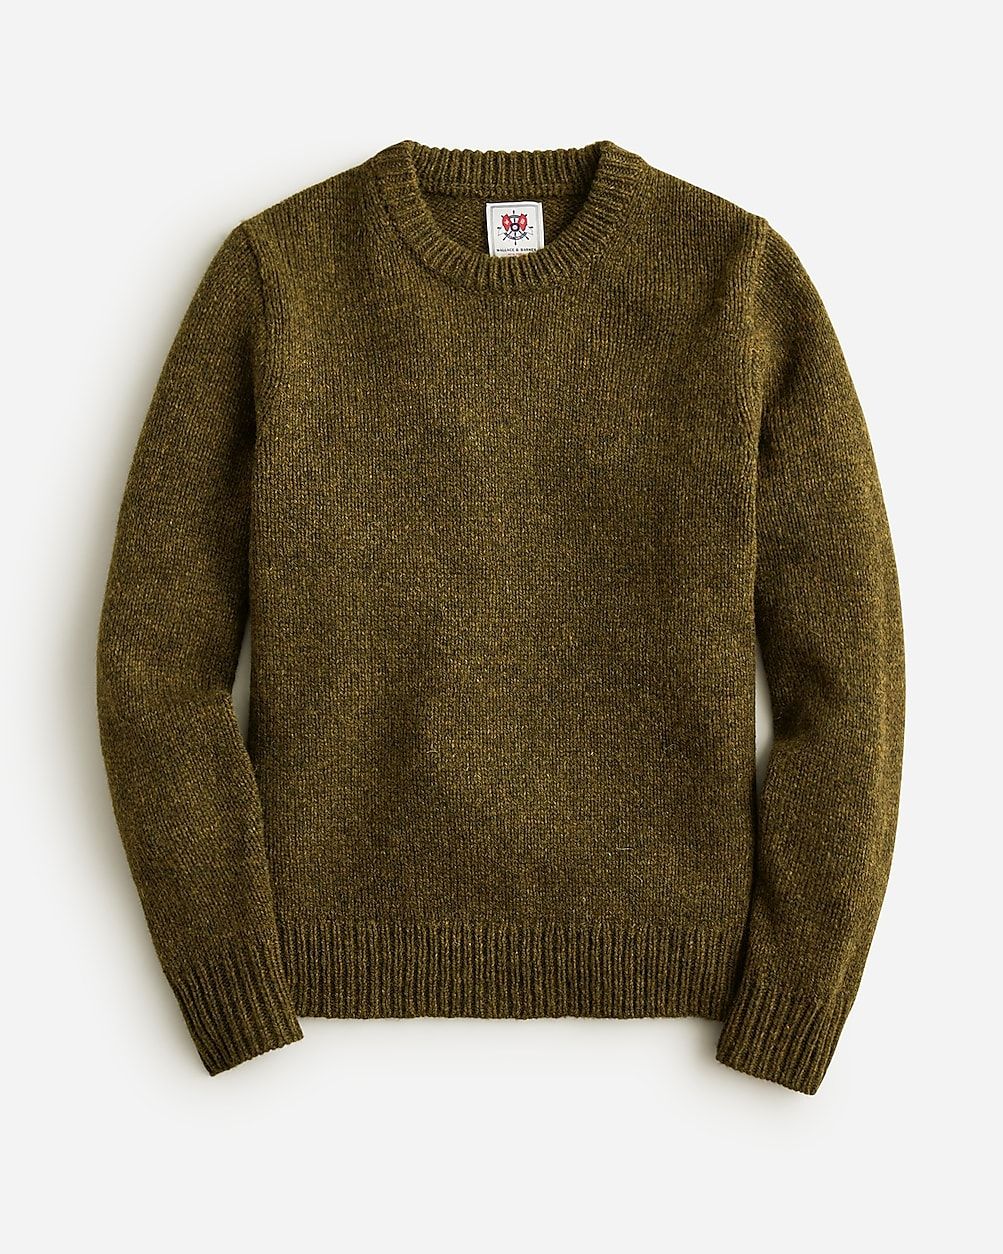 Wallace & Barnes wool heather crewneck sweater | J.Crew US